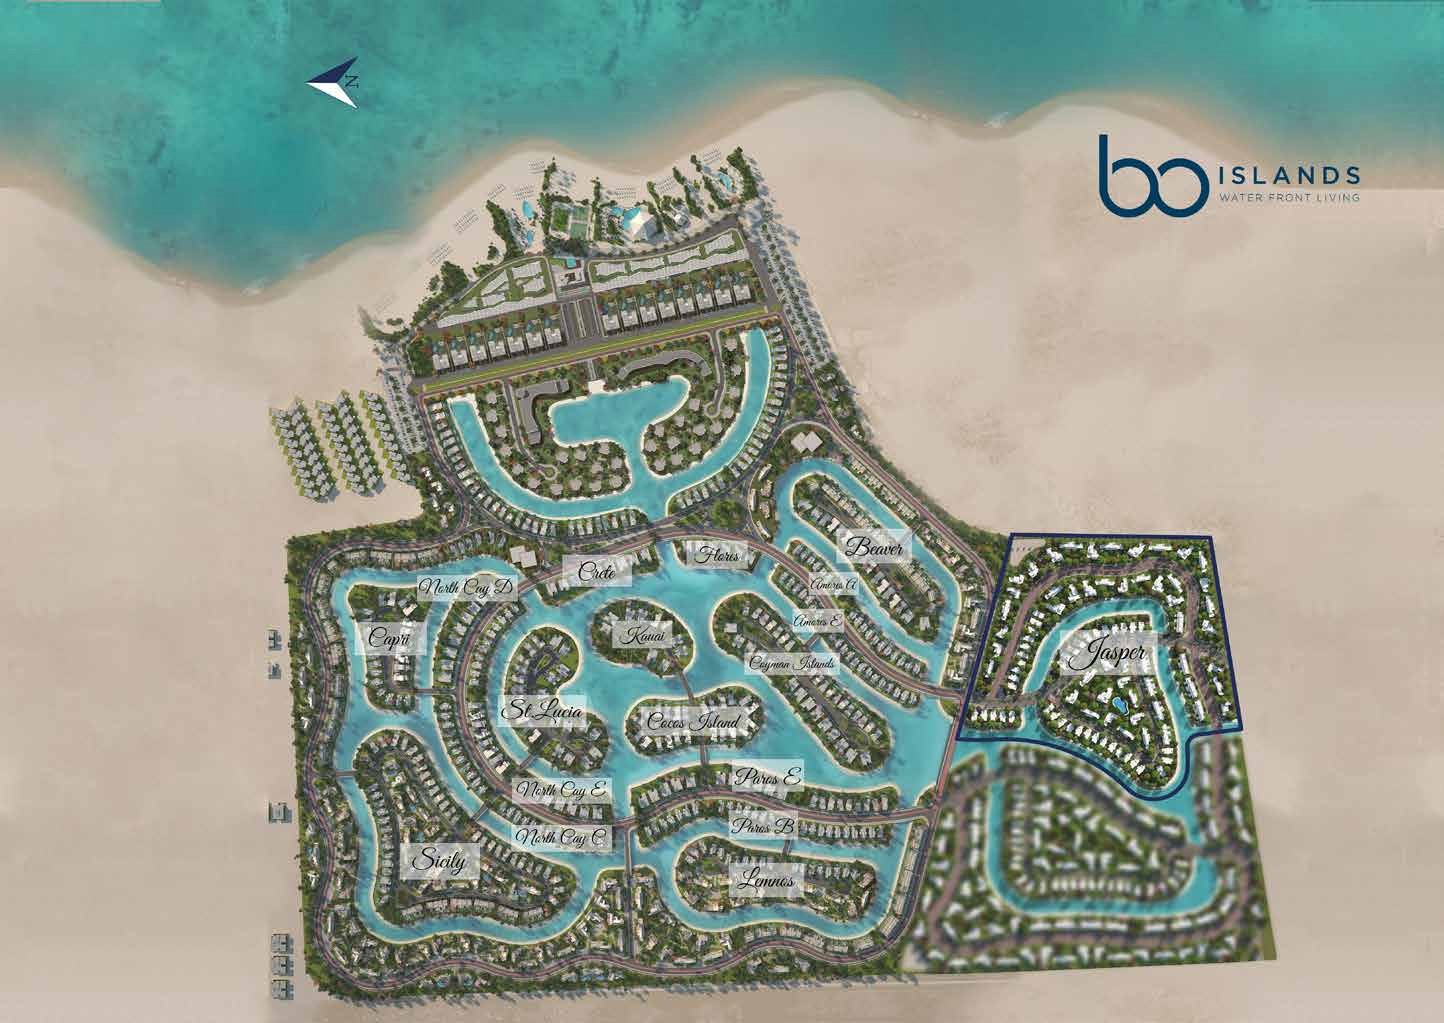 Bo Islands master plan